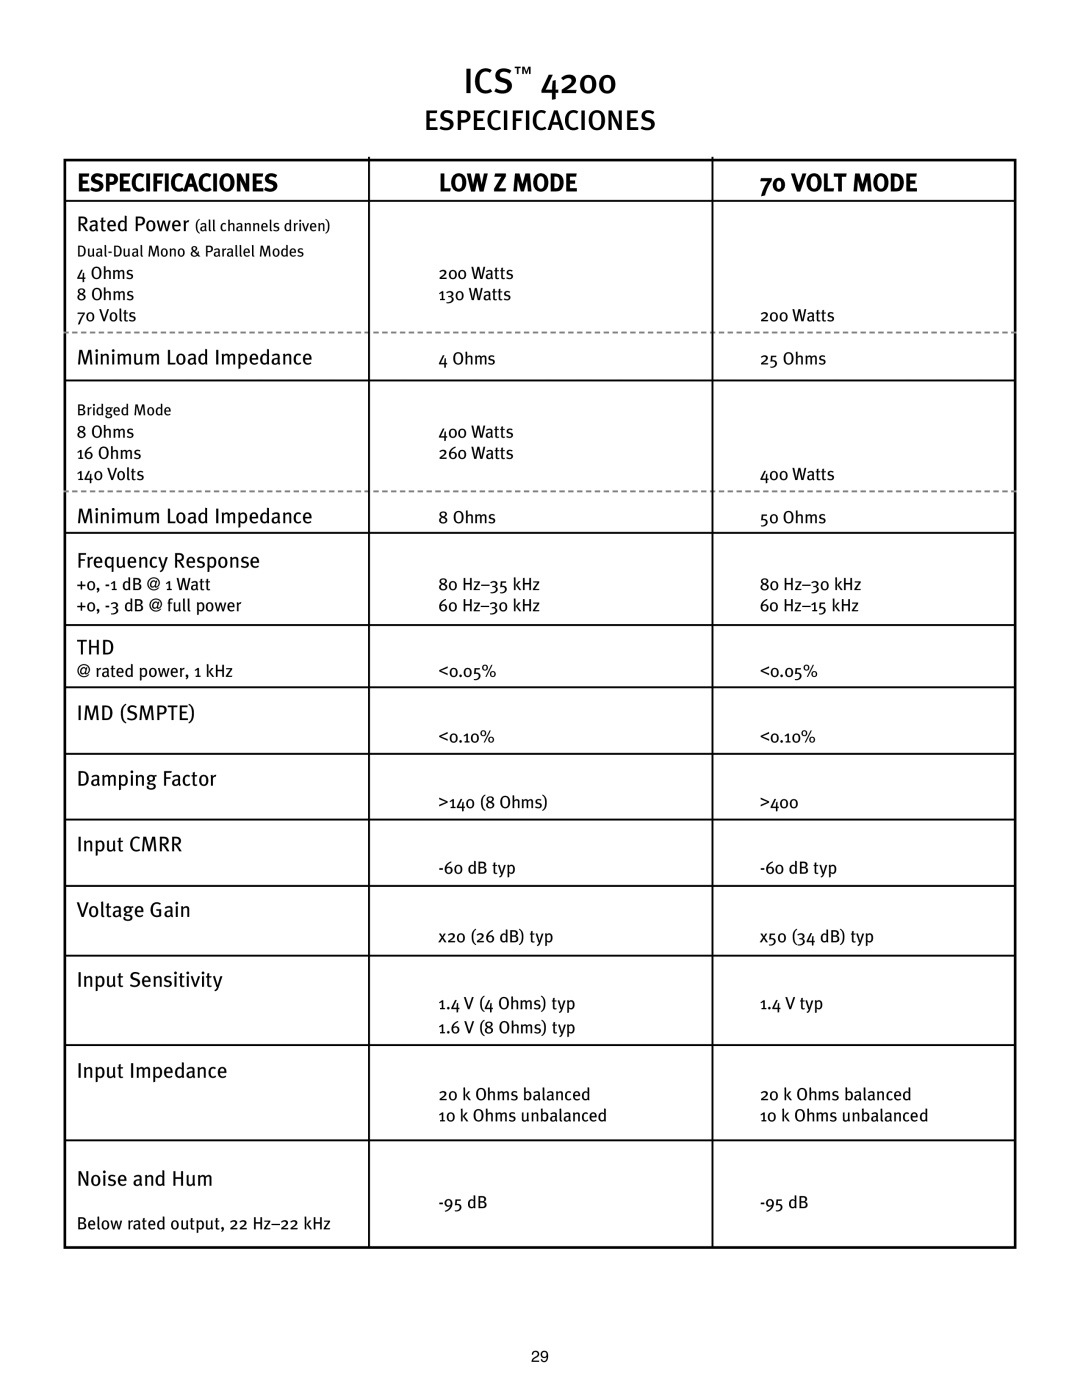 Peavey ICS 4200 user manual Especificaciones, Low Z Mode, Volt Mode 